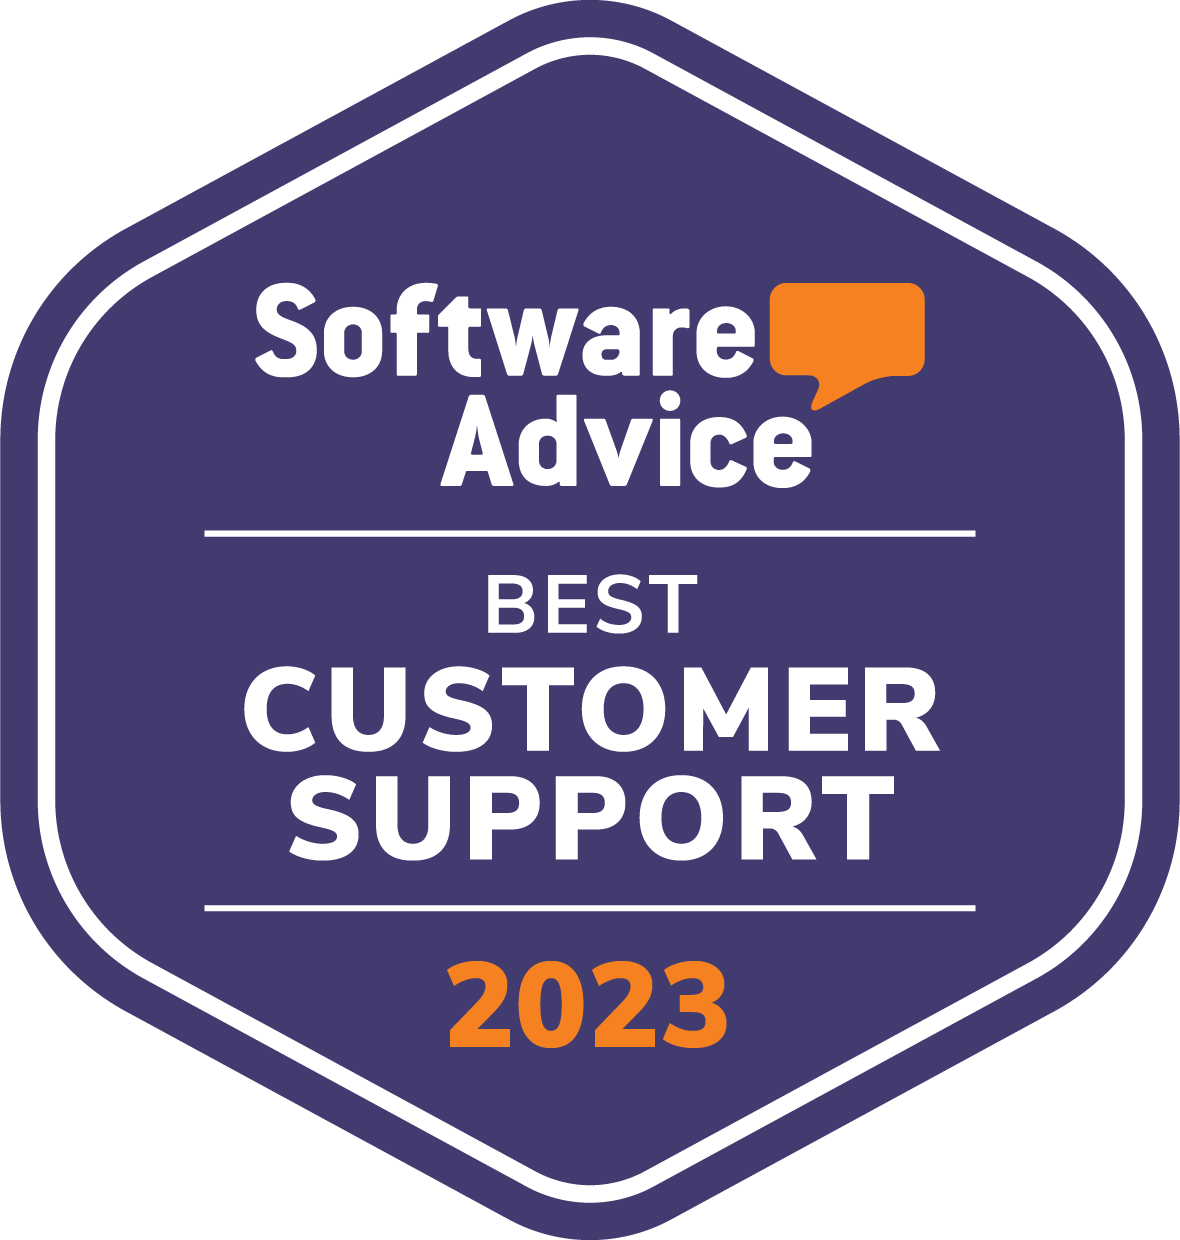 software advice award best customer support 2023